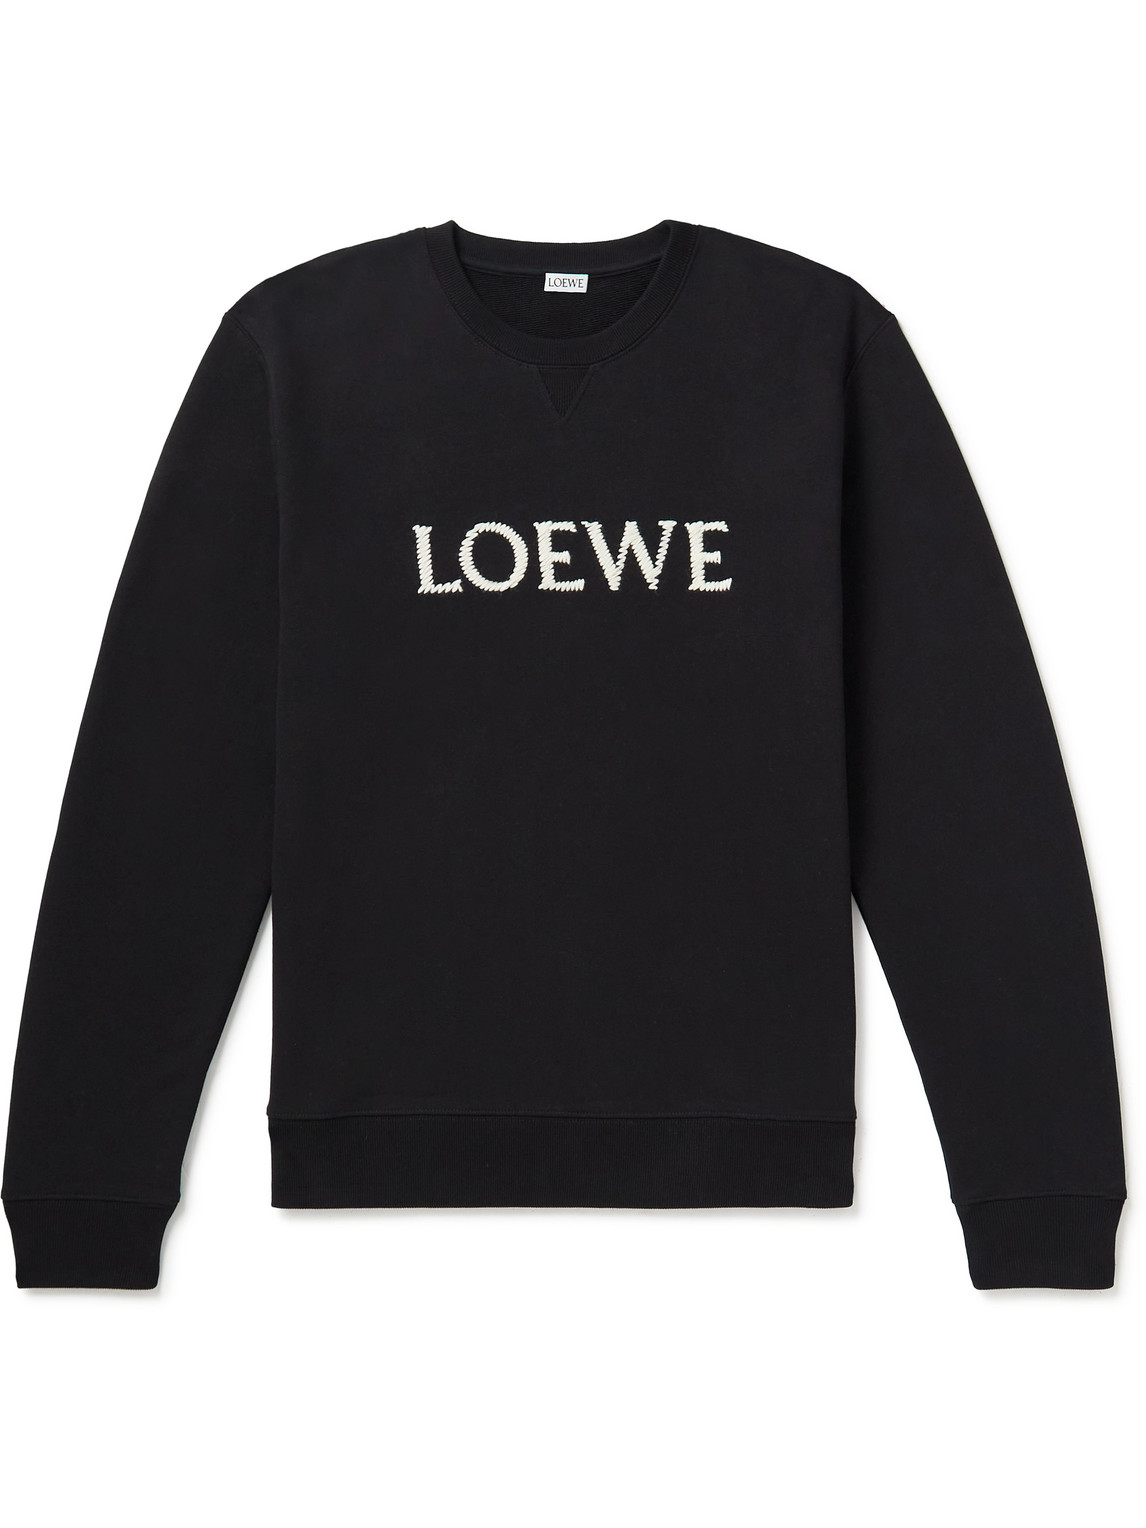 LOEWE - Logo-Embroidered Cotton-Jersey Sweatshirt - Men - Black - M von LOEWE